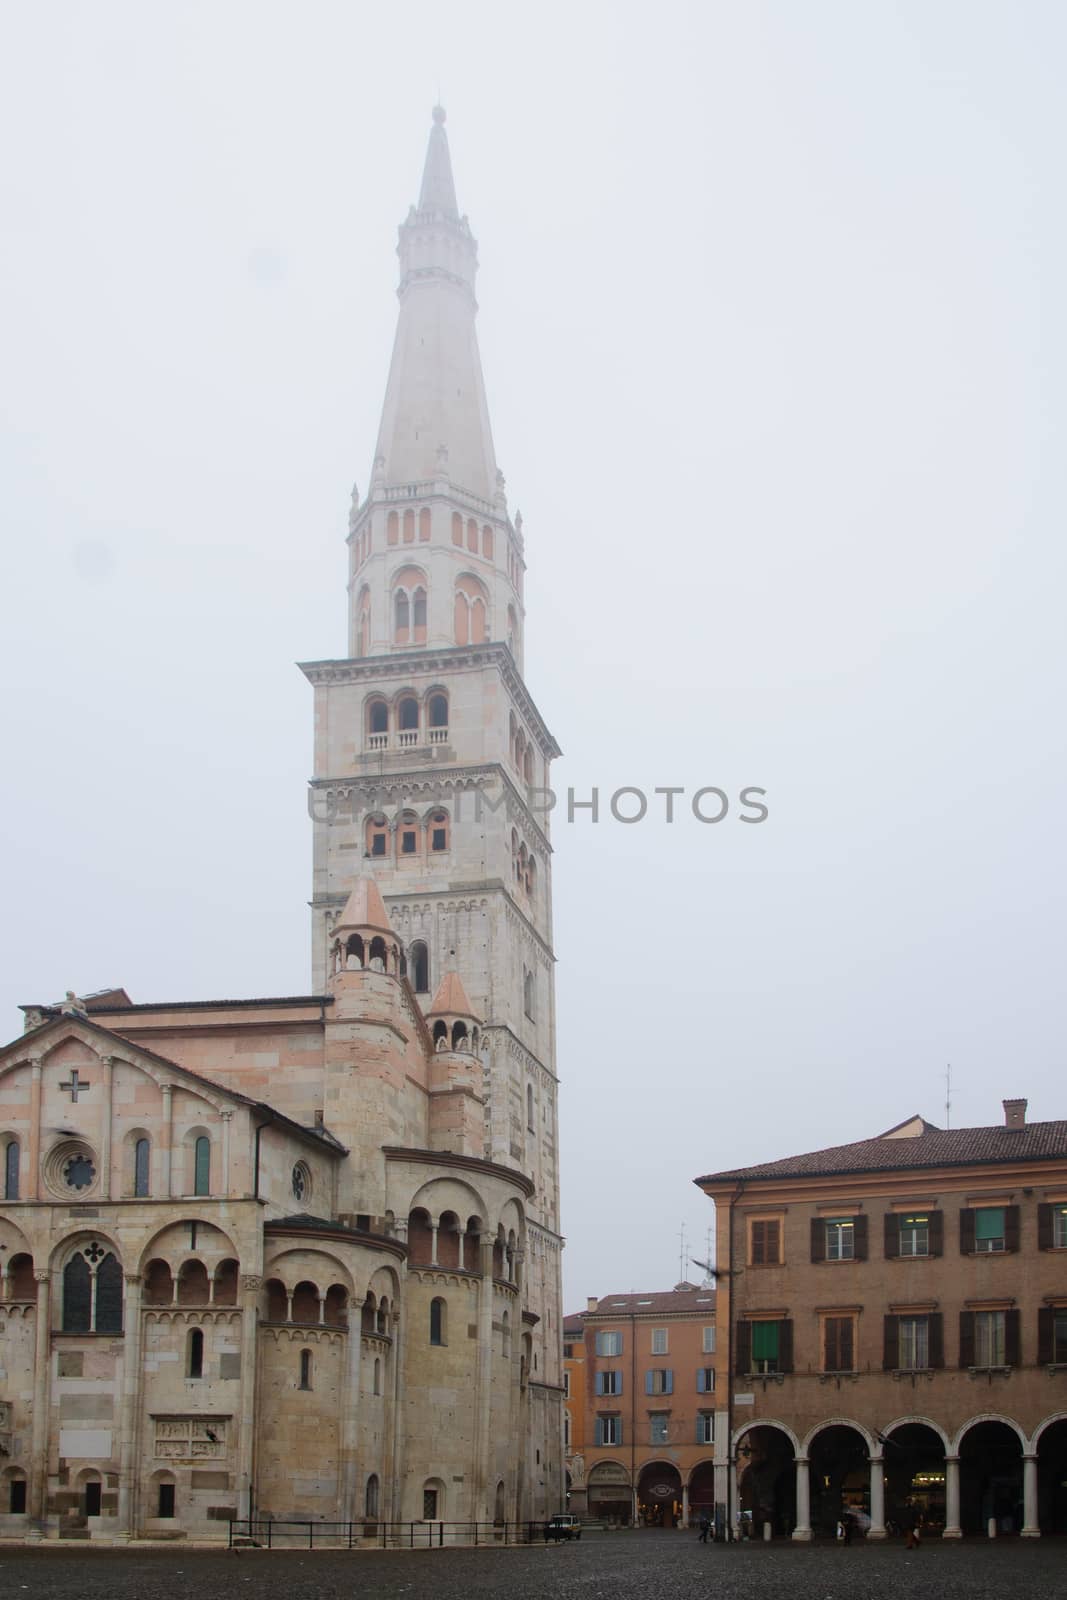 The Duomo (cathedral) of Modena, Emilia-Romagna, Italy